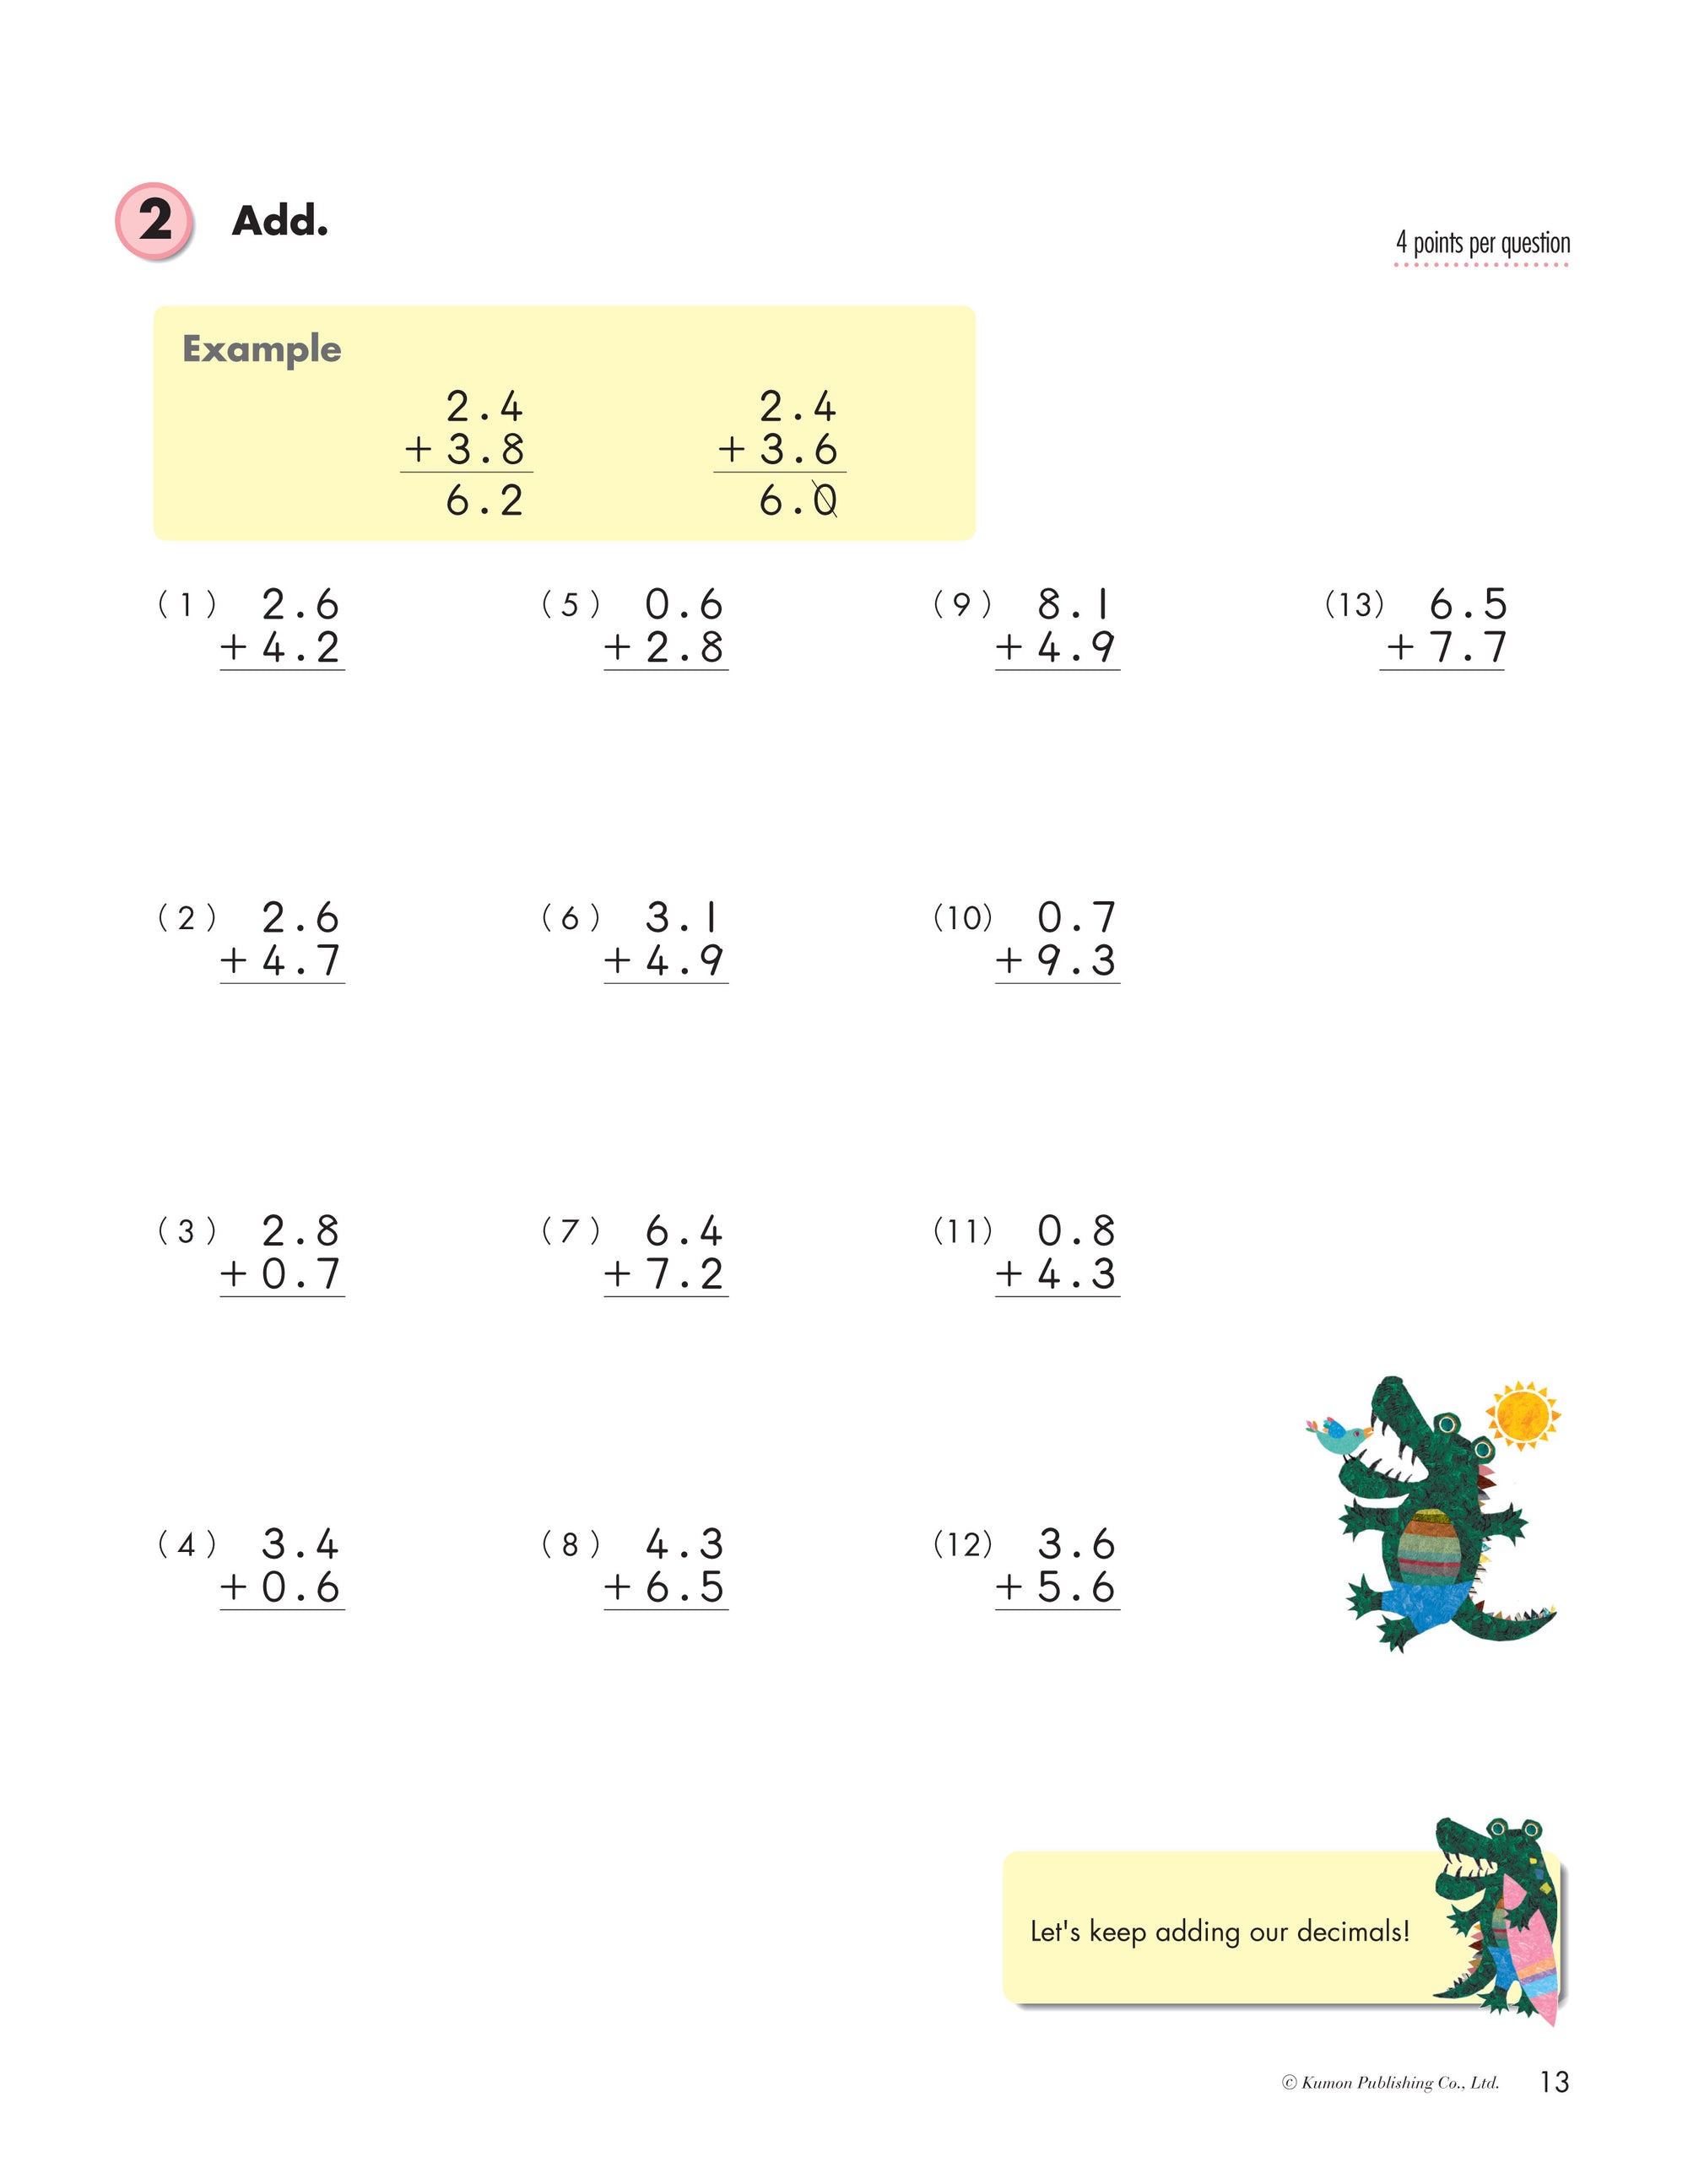 Kumon Math Workbooks Grade 4: Decimals & Fractions